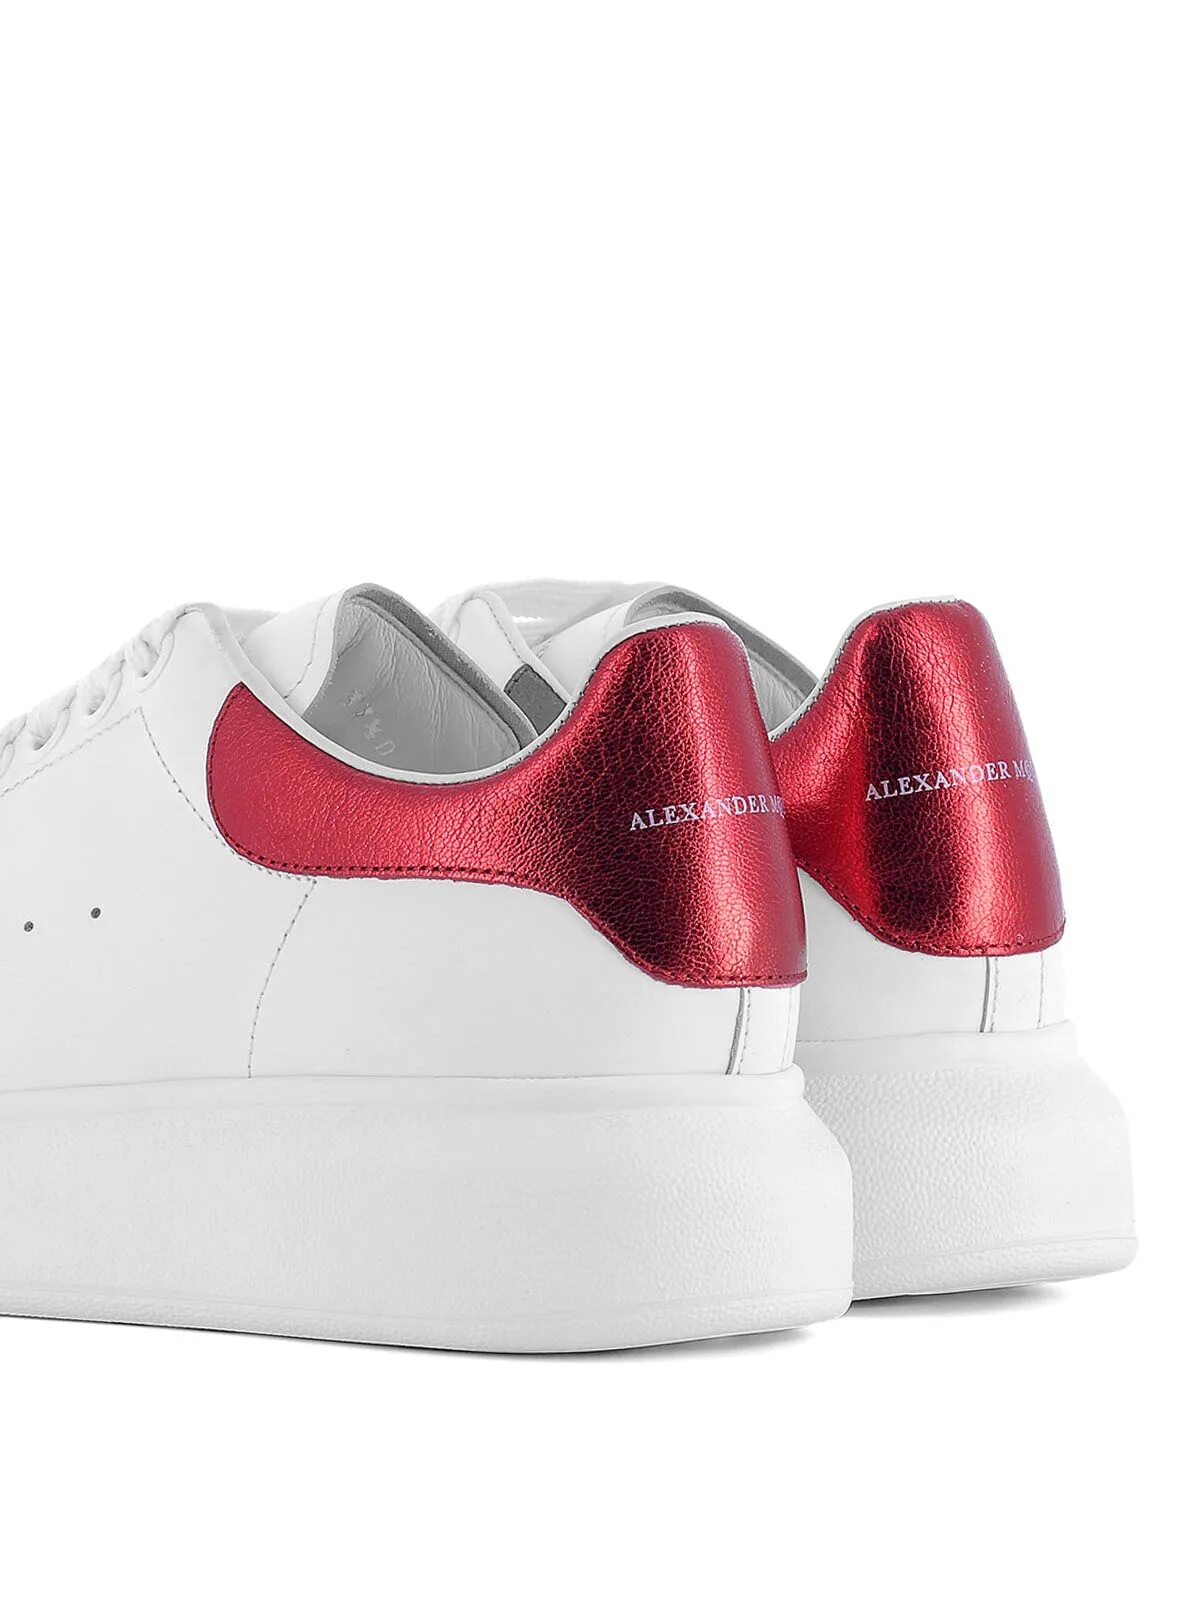 Маквин обувь. Alexander MCQUEEN ботинки. Alexander MCQUEEN White Red Sneakers.